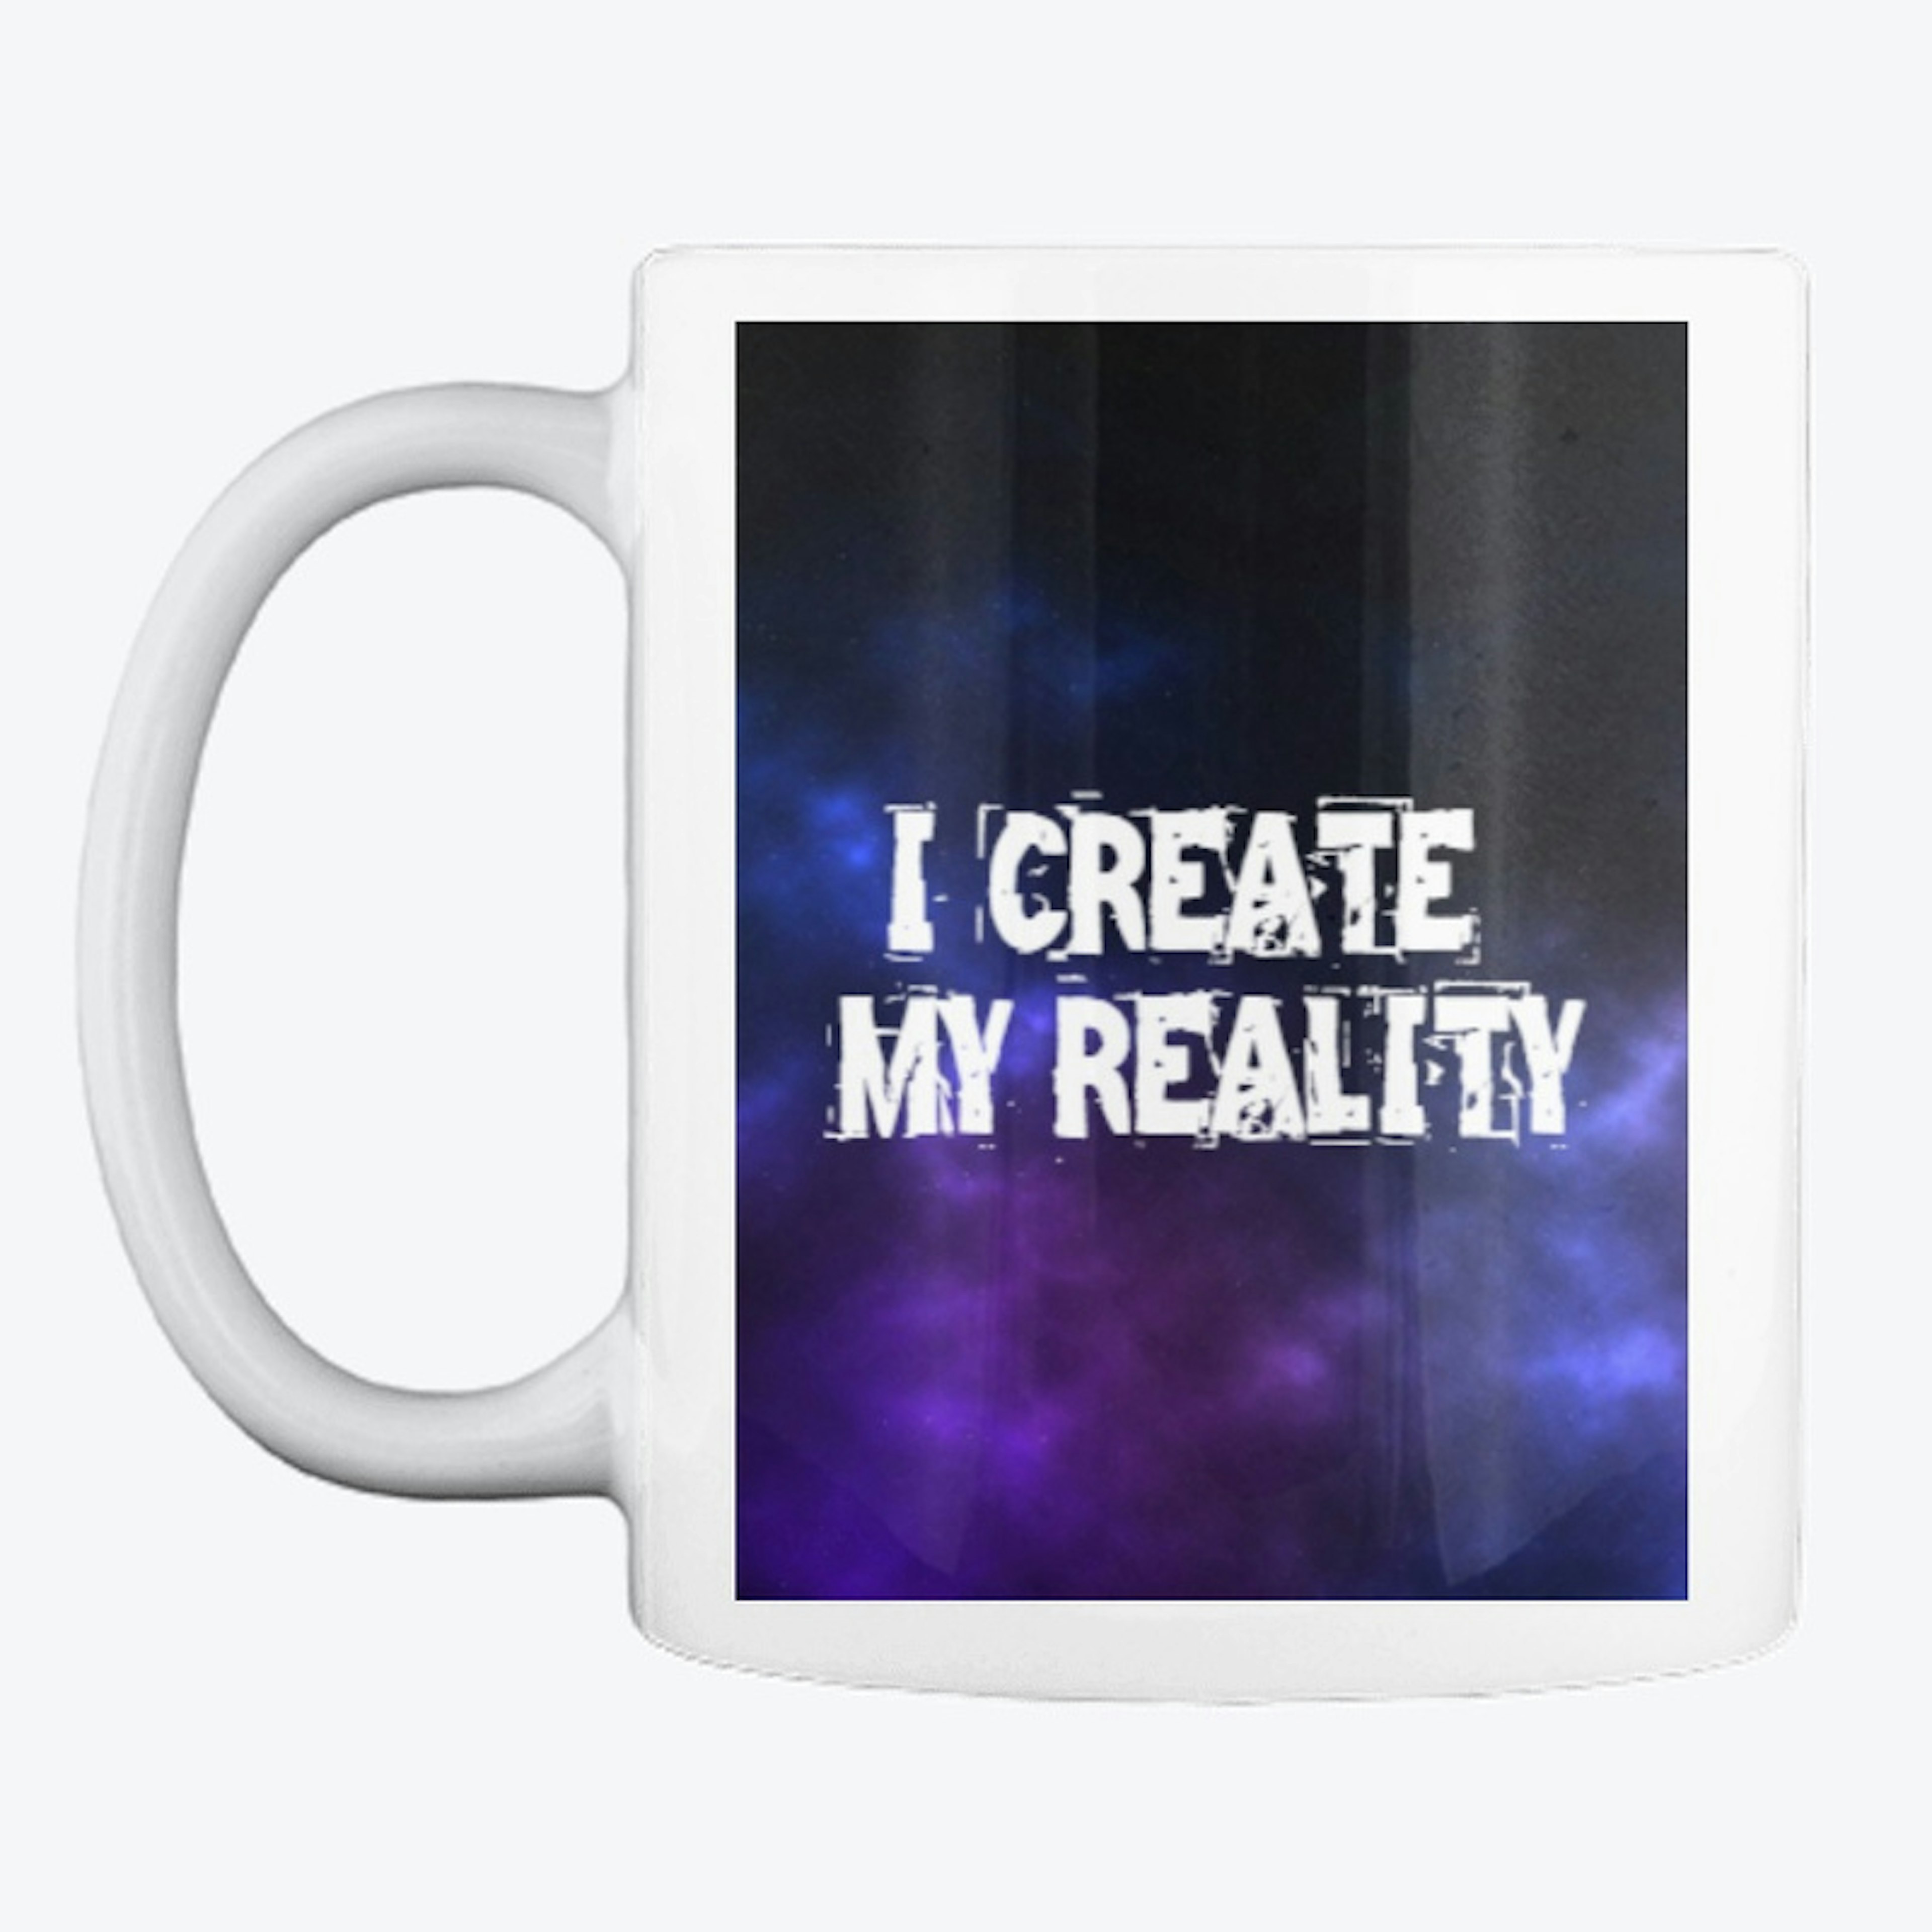 I create my reality